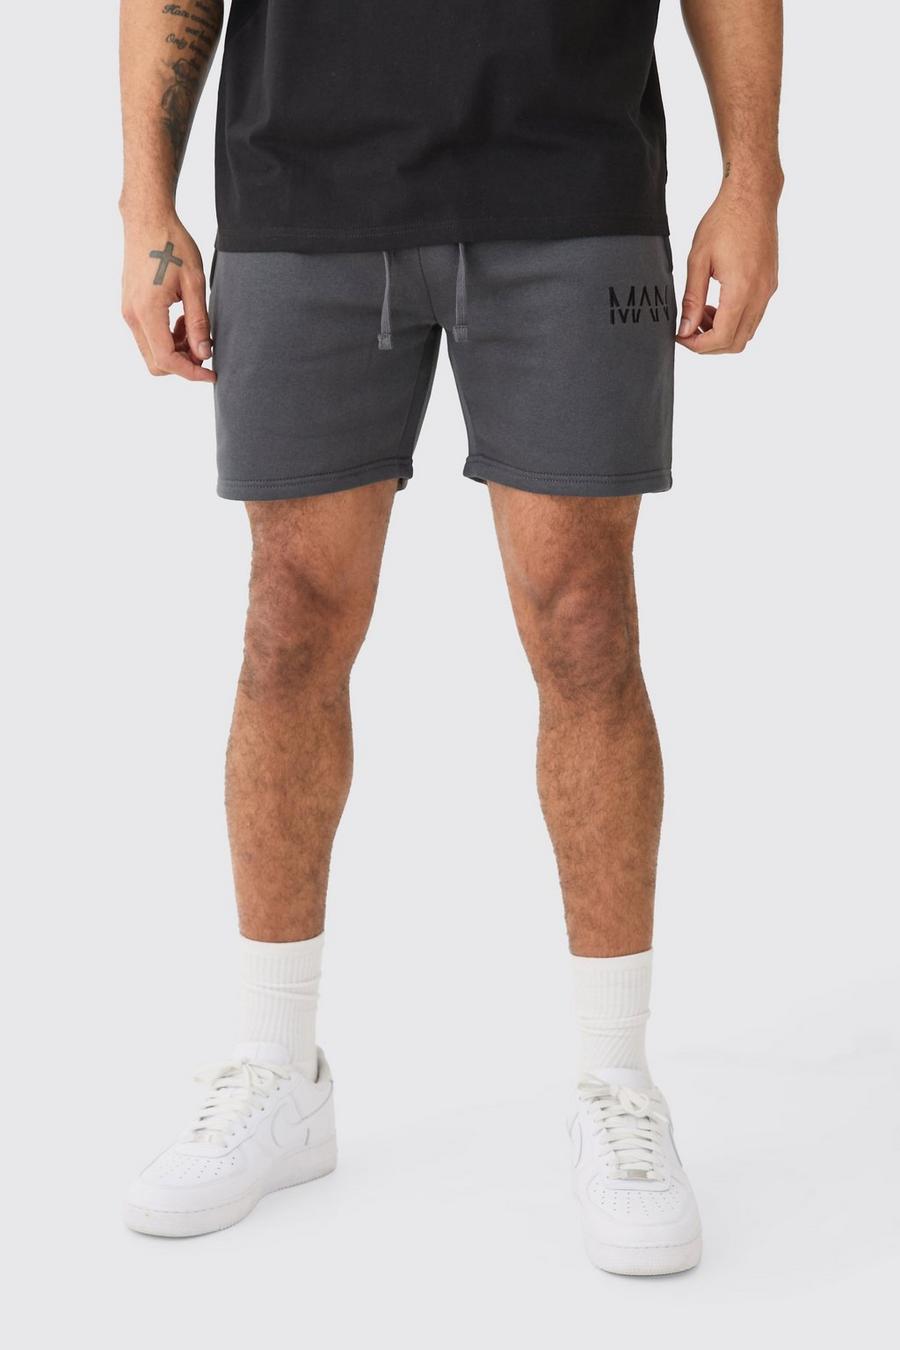 Man-Dash Slim-Fit Shorts, Charcoal image number 1